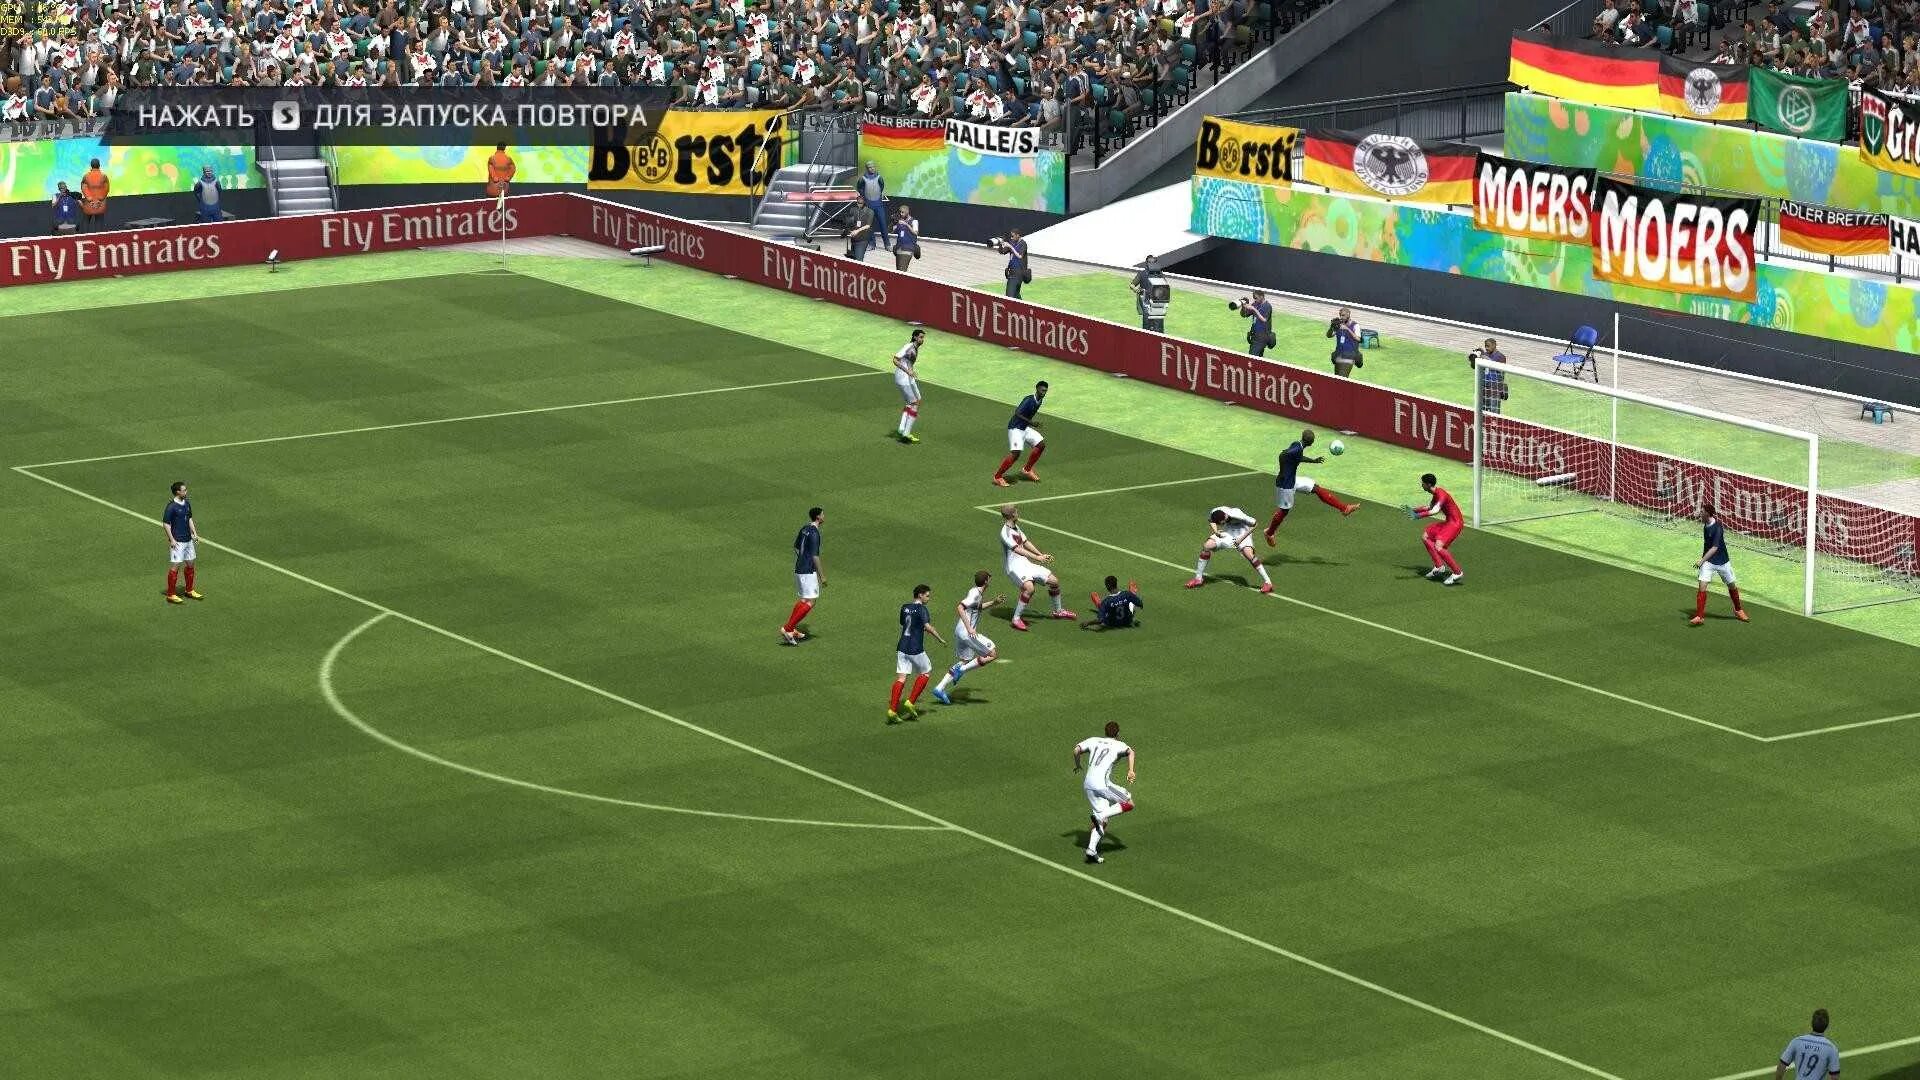 FIFA Soccer 14. ФИФА 14 ворлд кап. ФИФА версия 14.700. FIFA 14 5. Полную версию 25